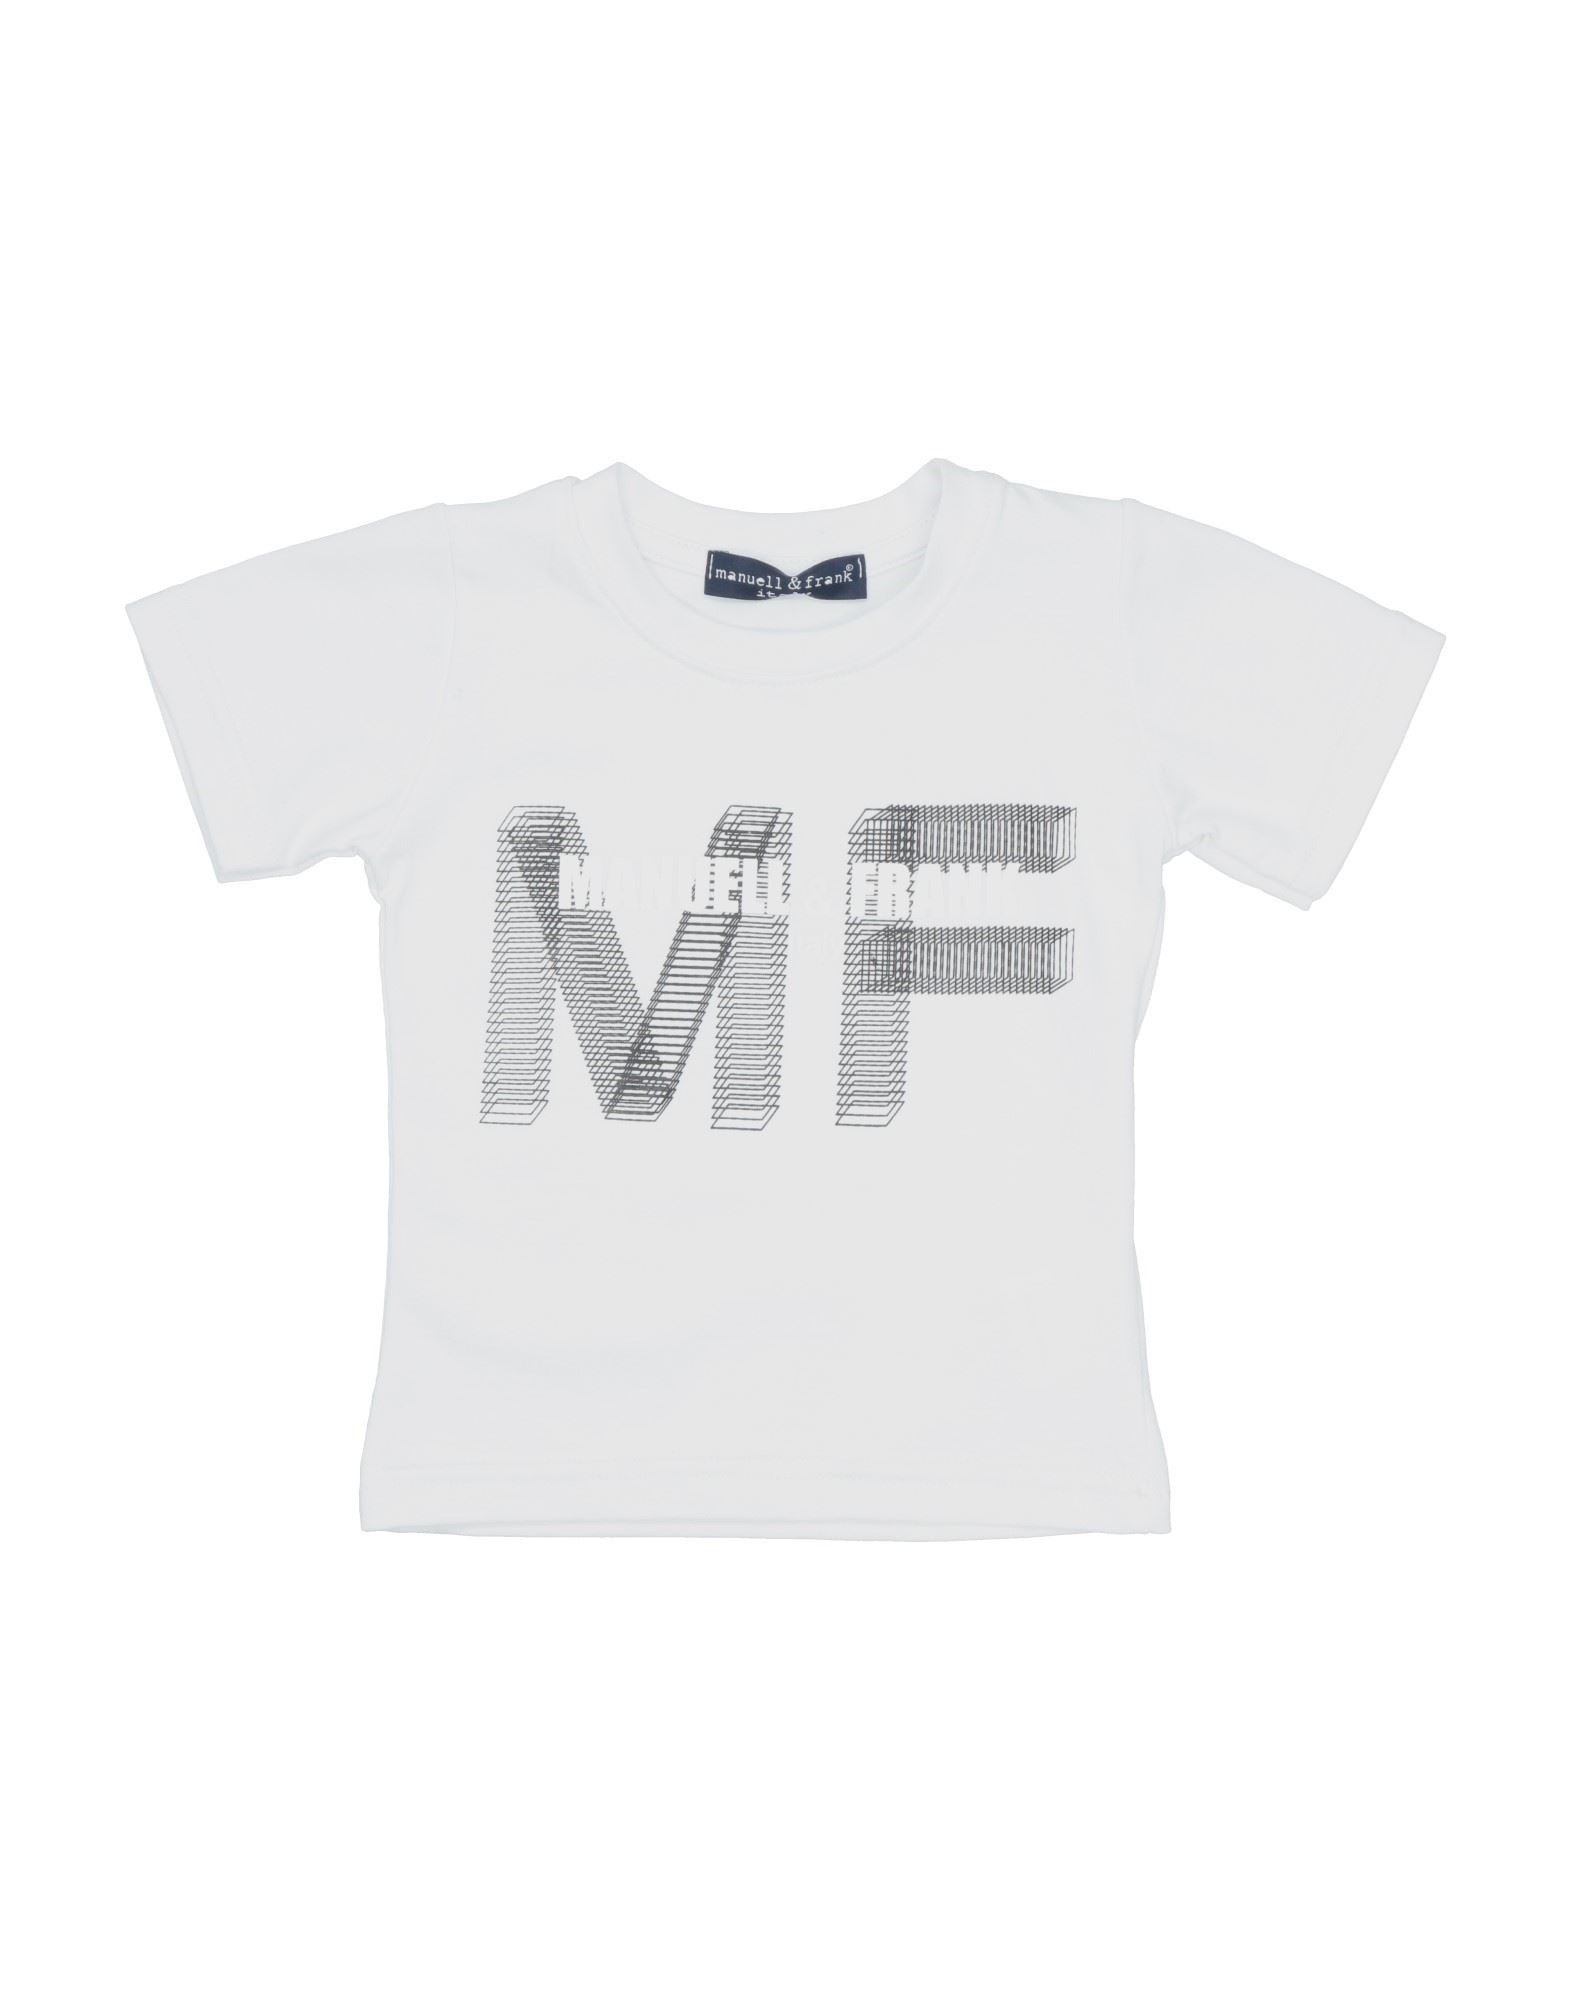 MANUELL & FRANK T-shirts Kinder Weiß von MANUELL & FRANK